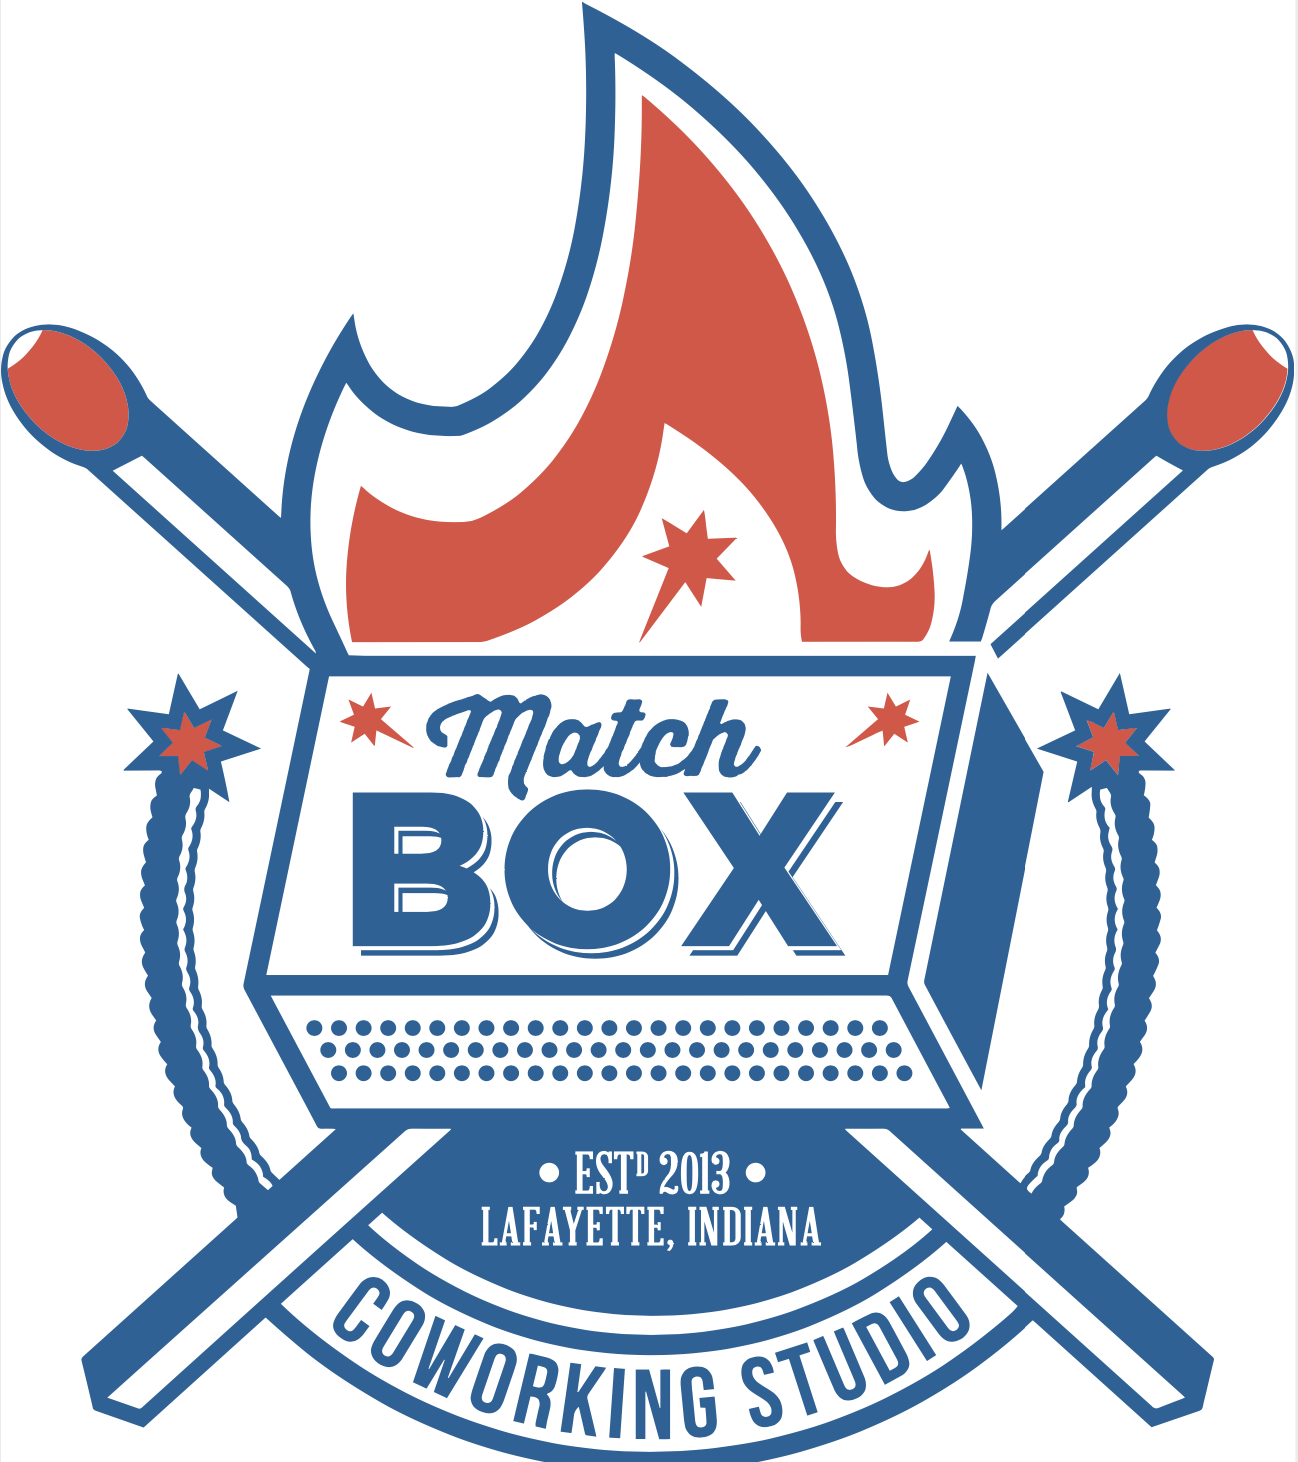 MatchBOX Coworking Studio logo